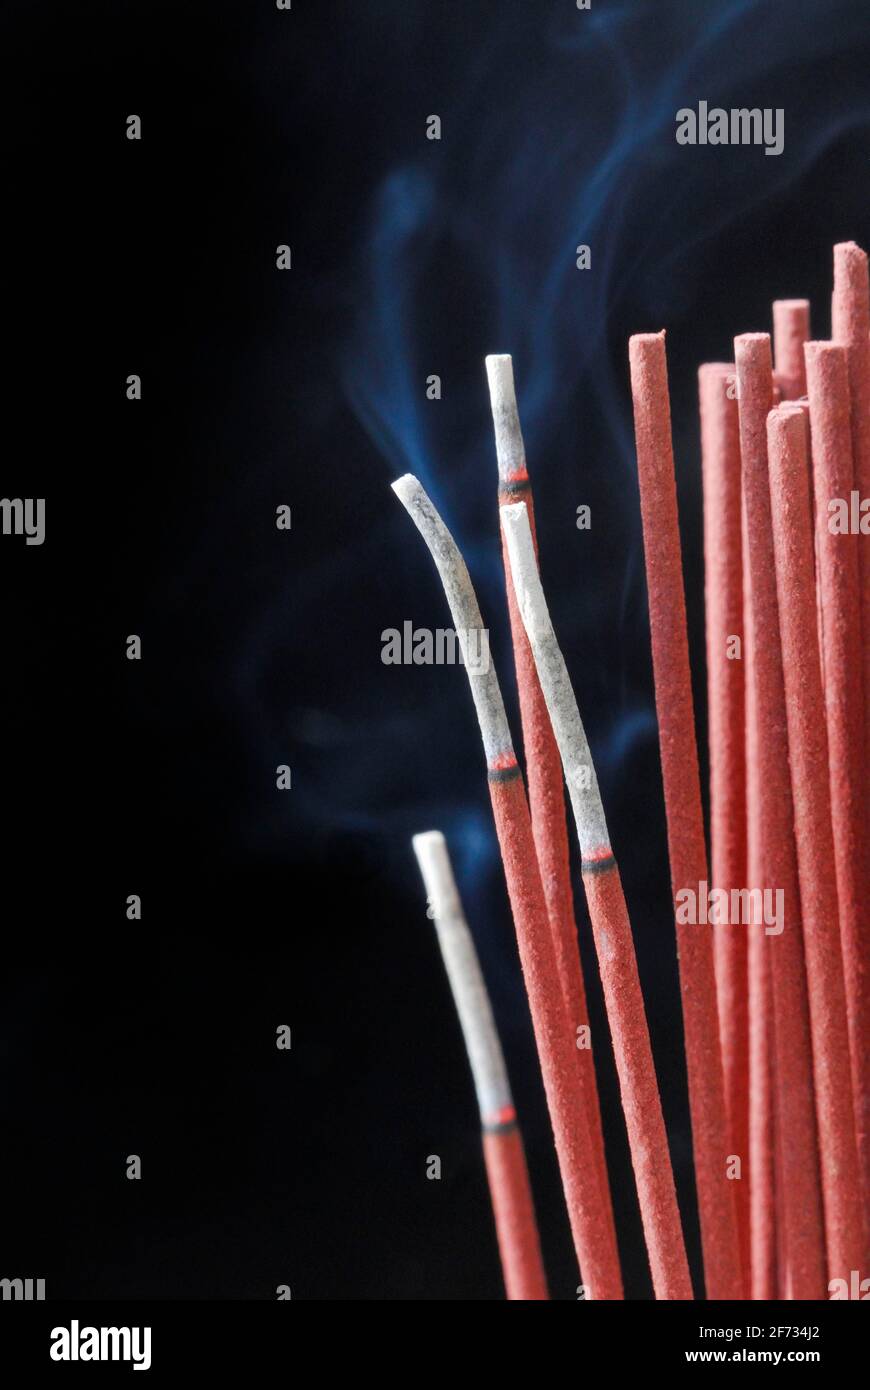 Incense sticks, aromatherapy, fragrance Stock Photo